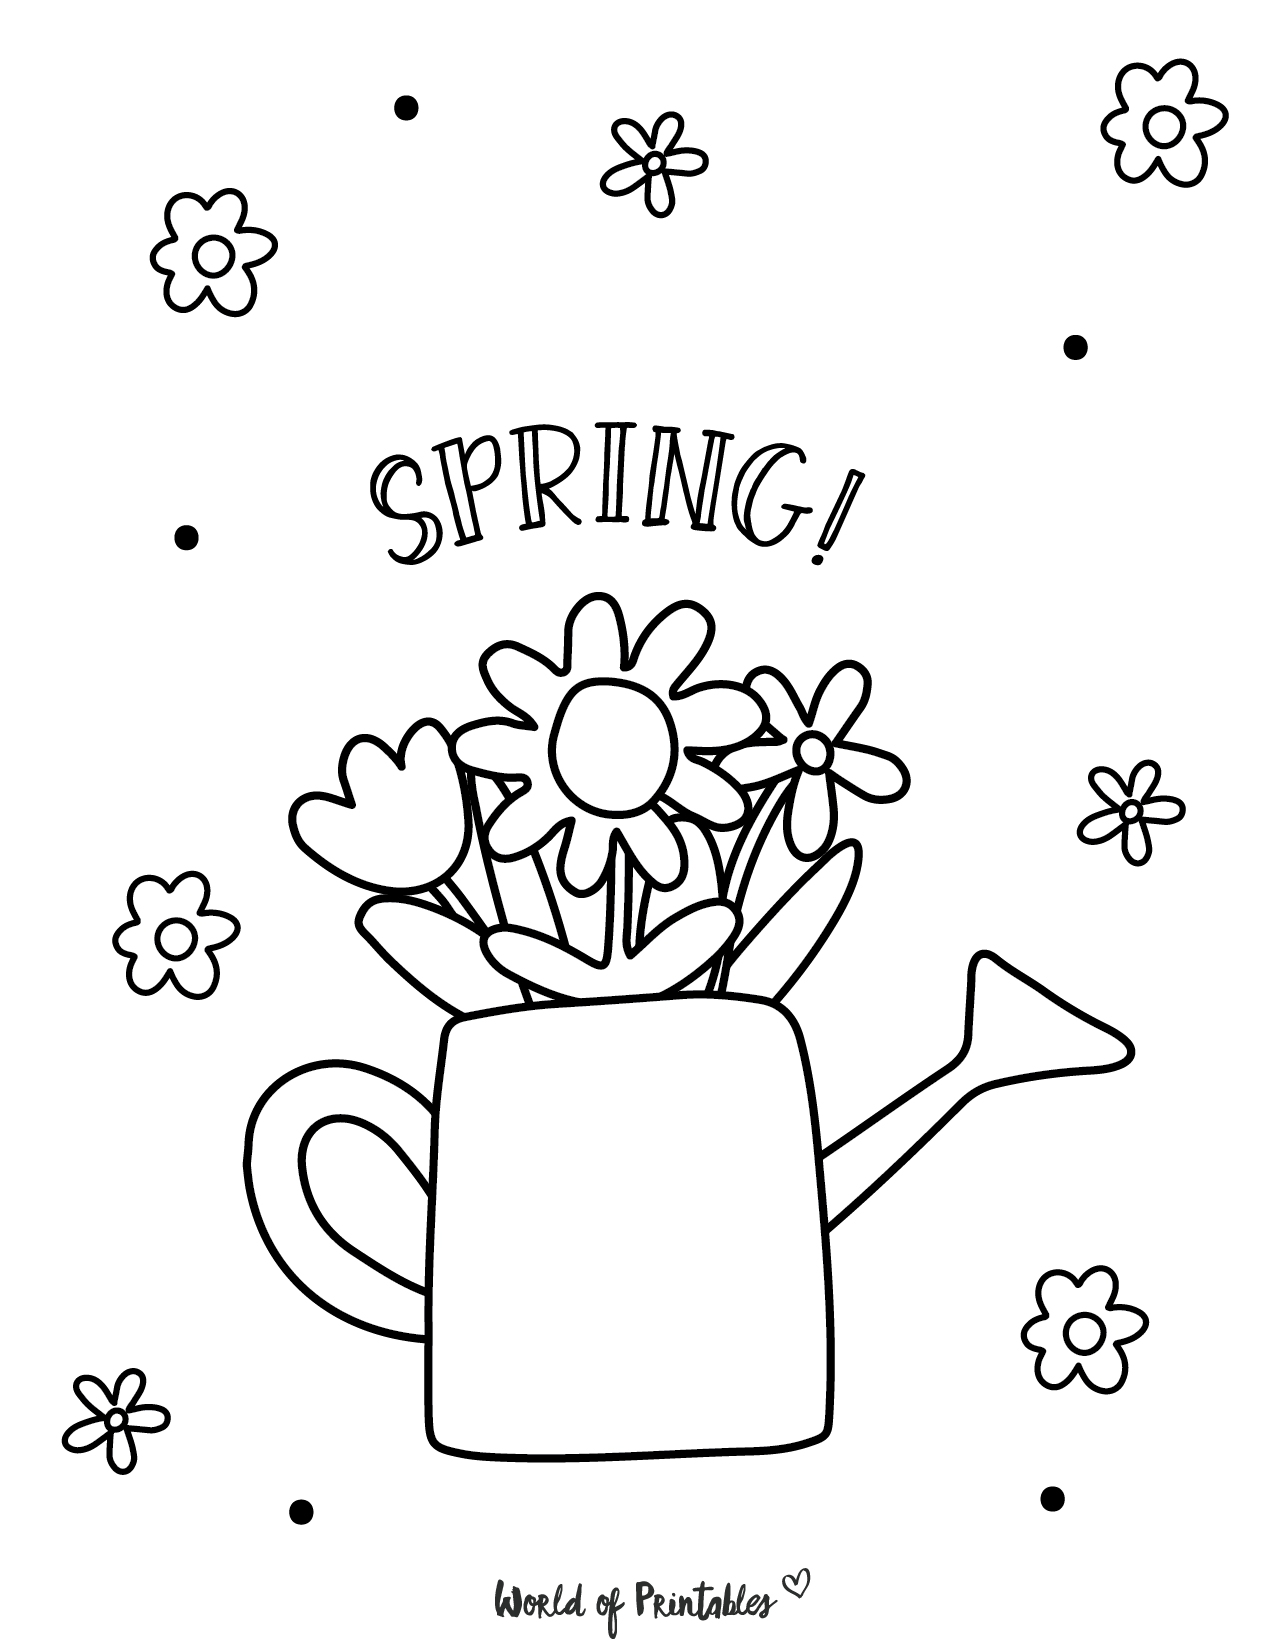 Spring printables templates worksheets